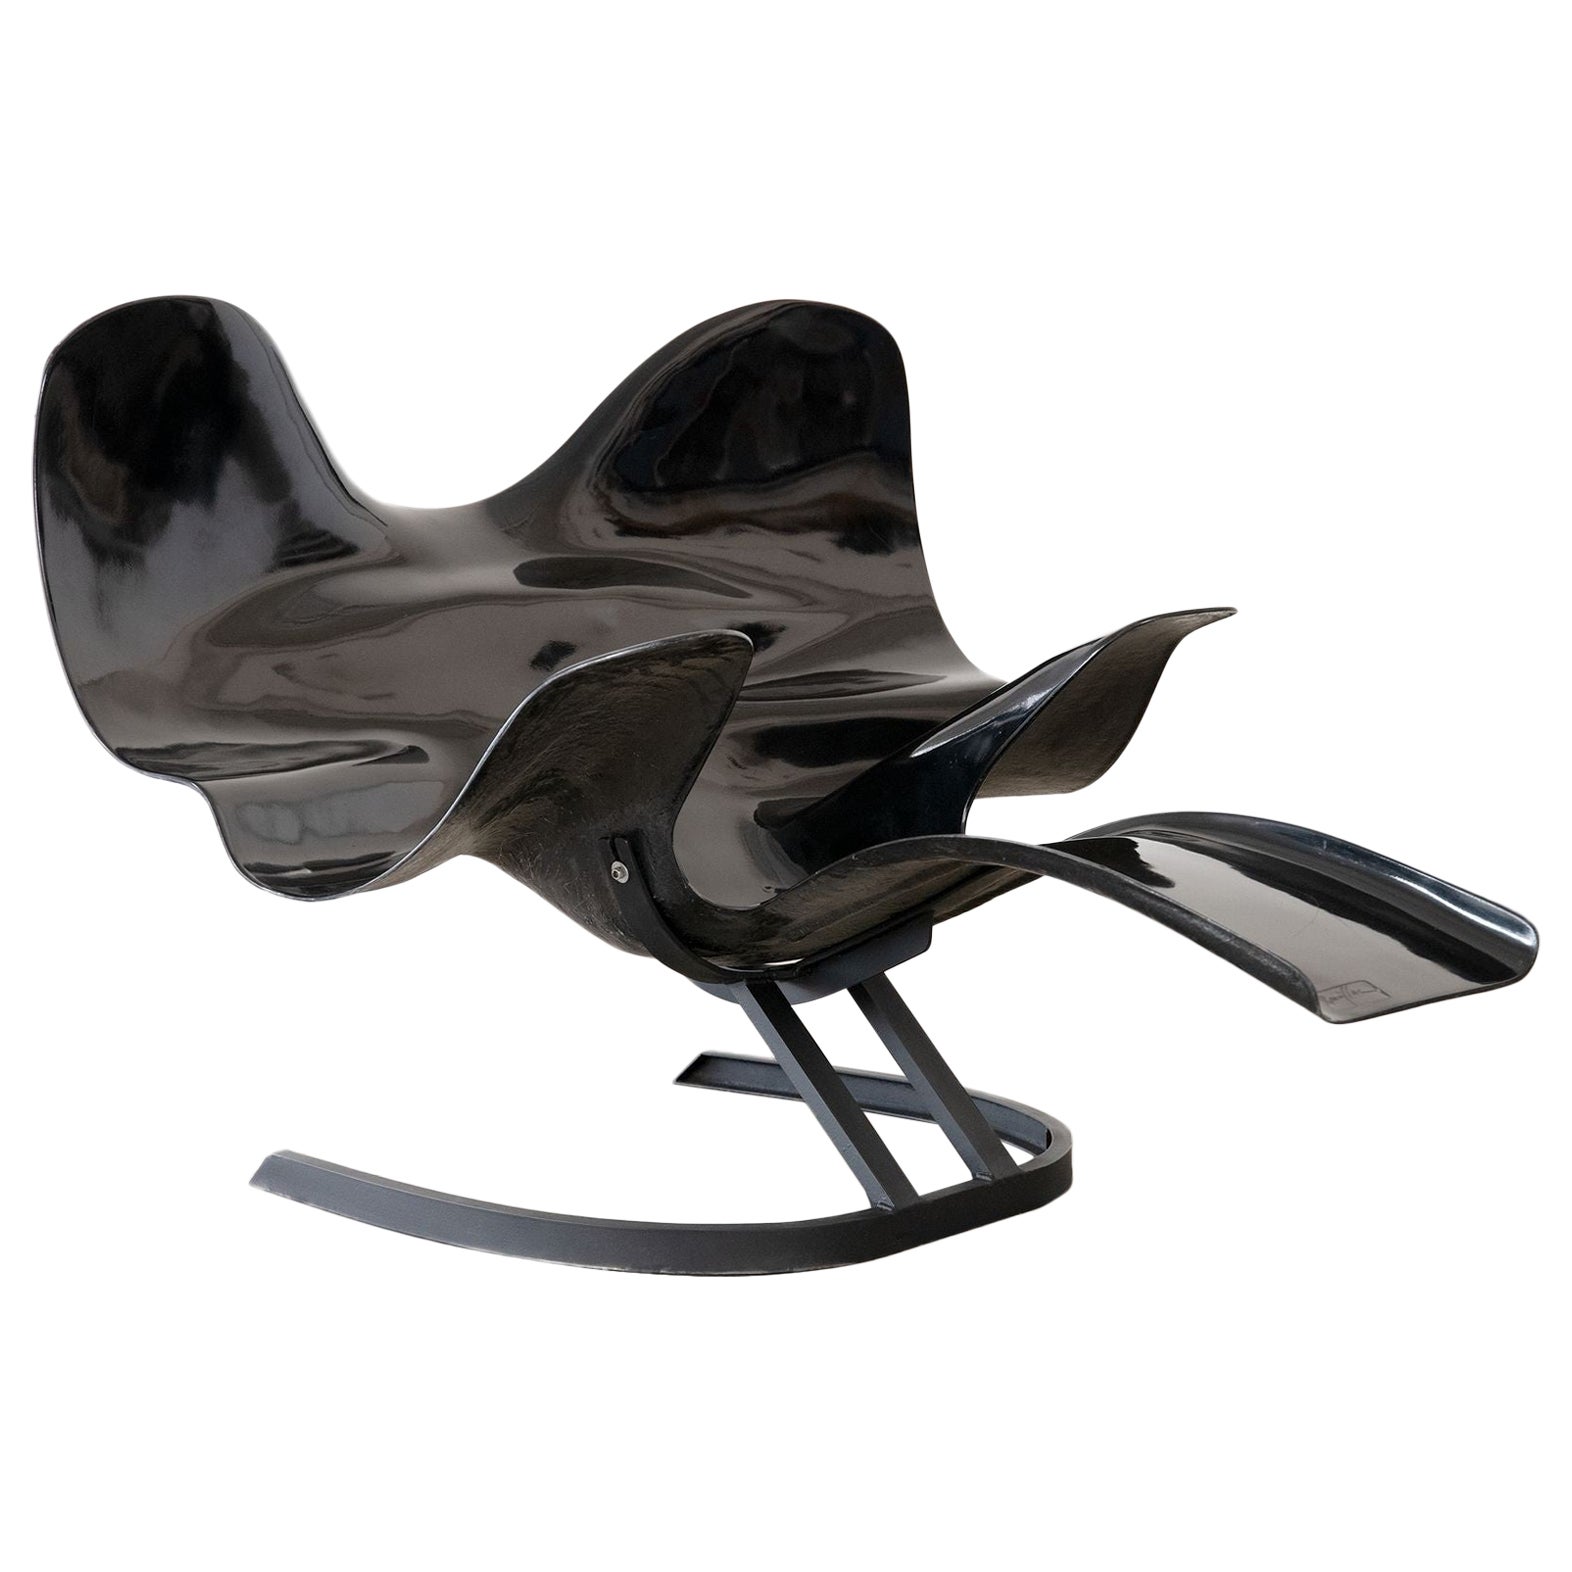 Bernard Rancillac Elephant Chair Prototype 1960s